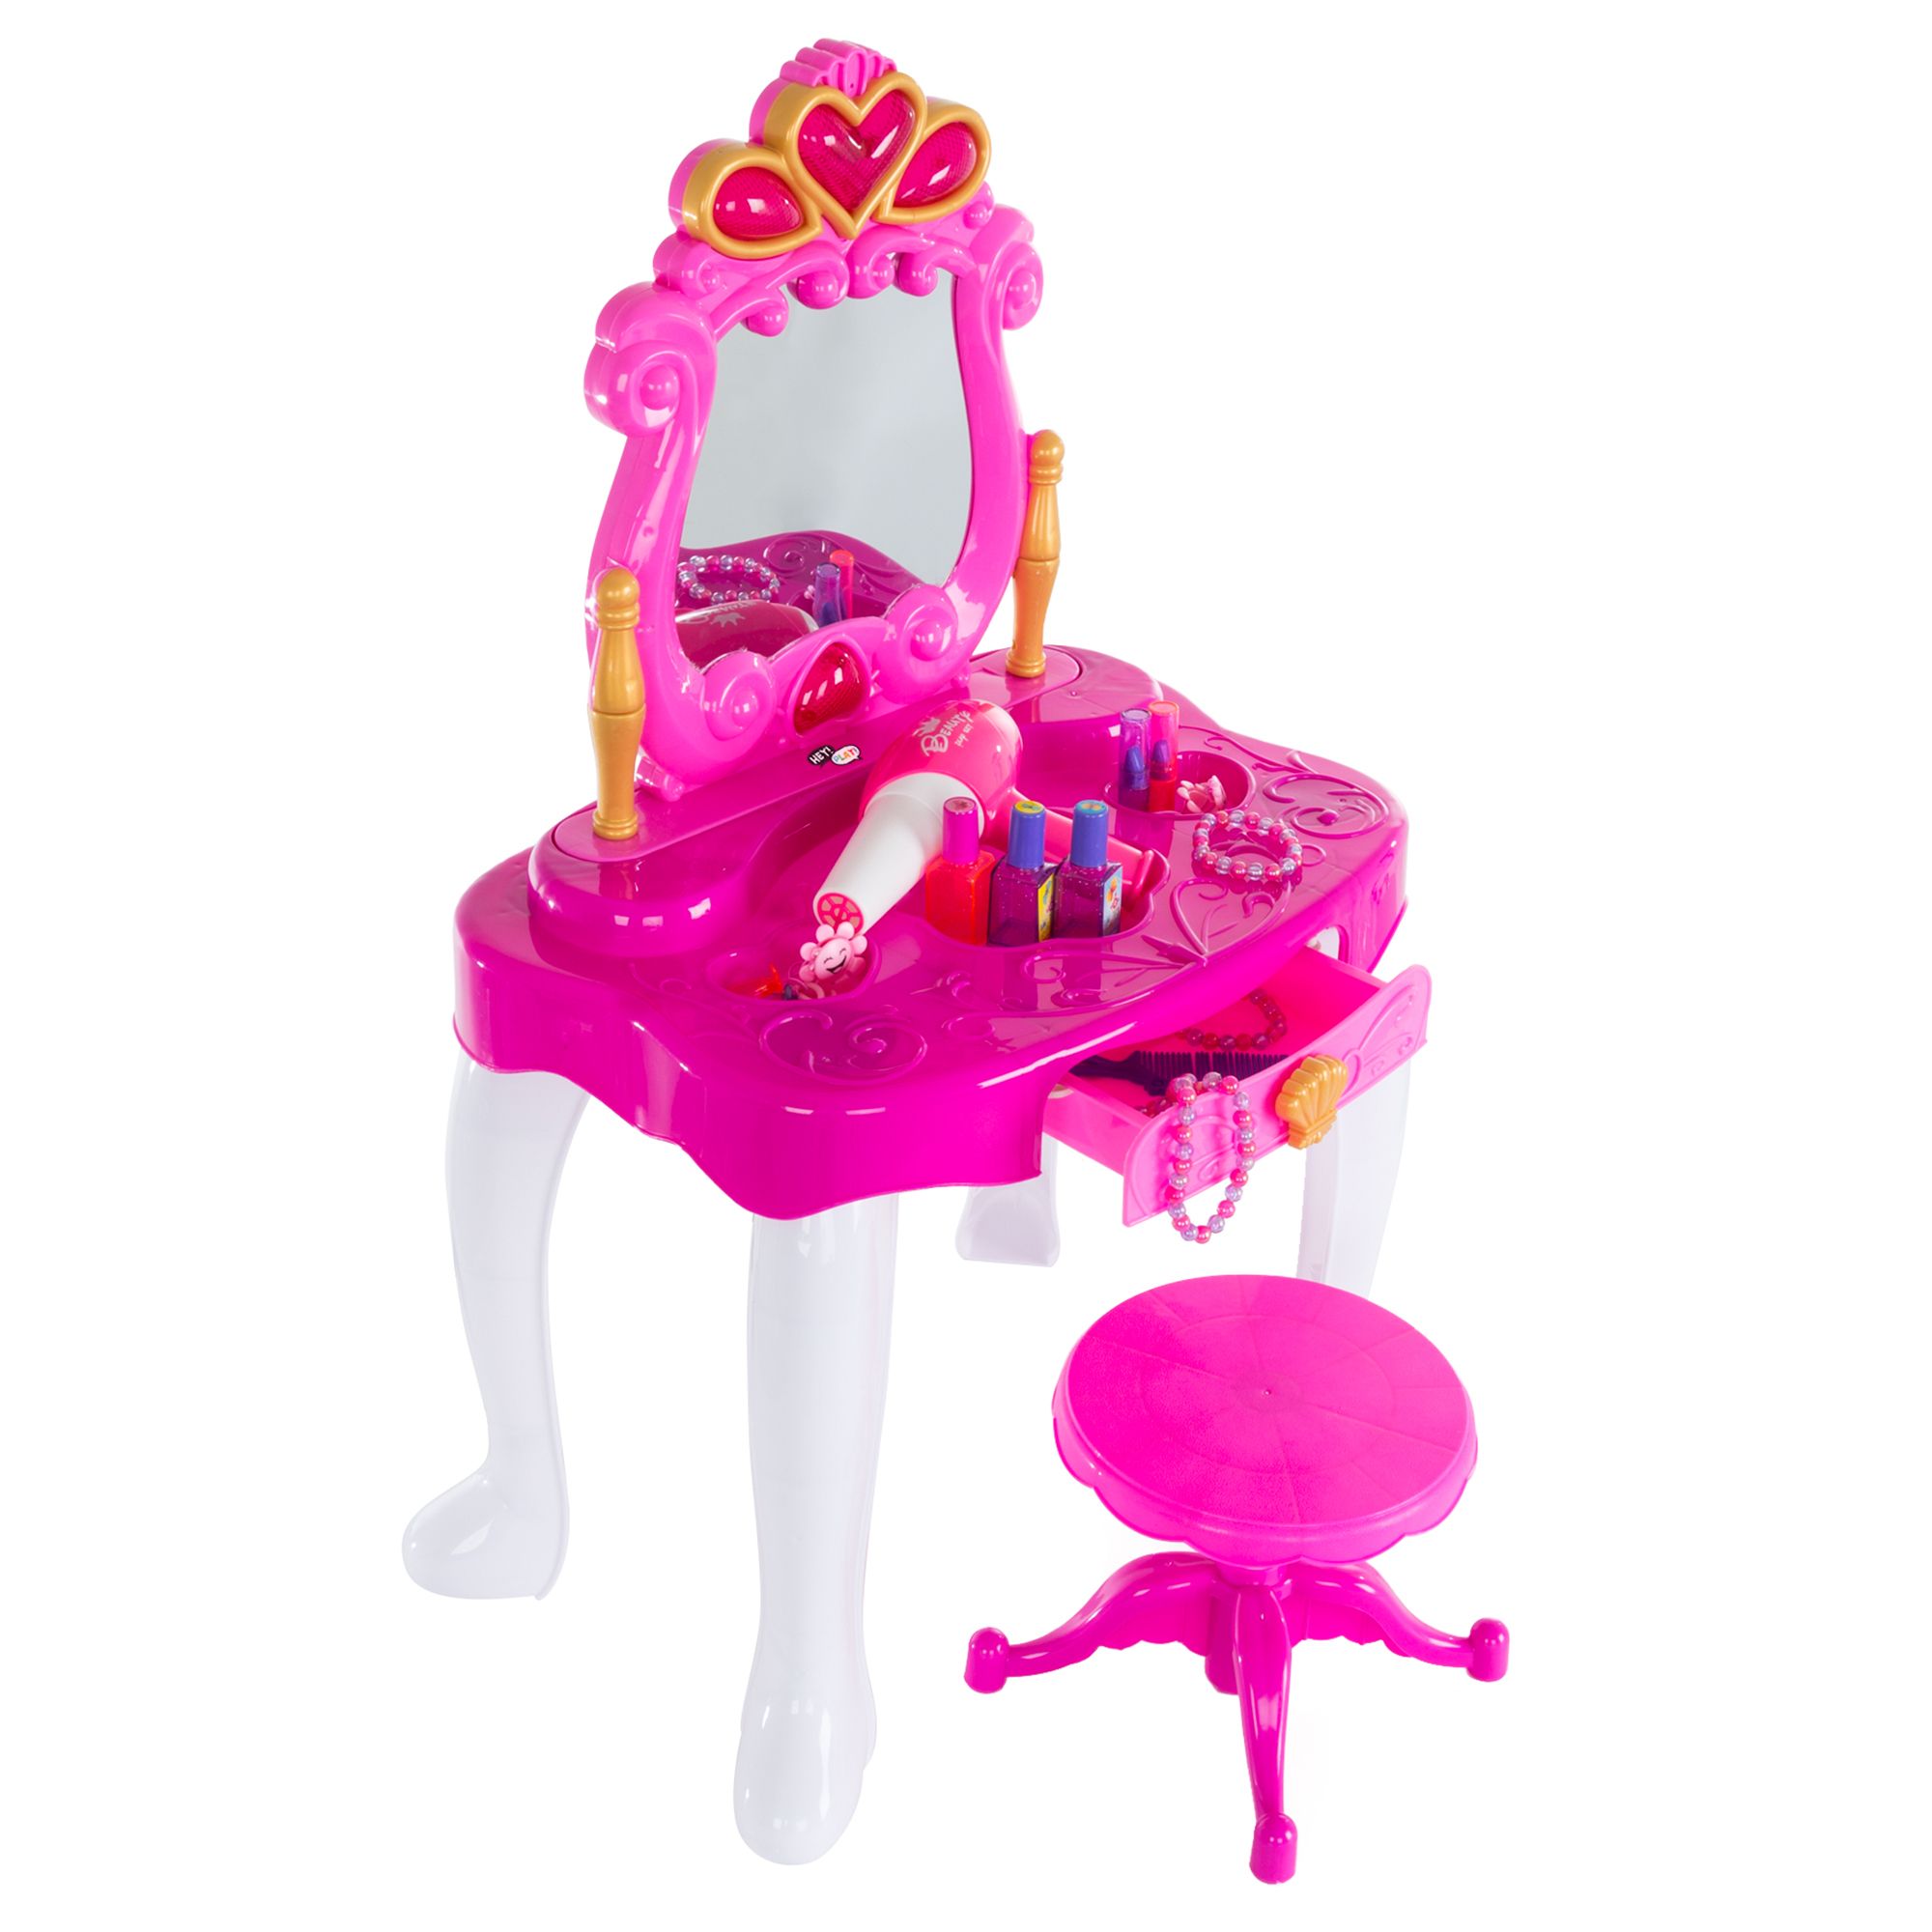 Kids Makeup Vanity Toy with Mirror Bathroom Sink Dresser Toy for 3